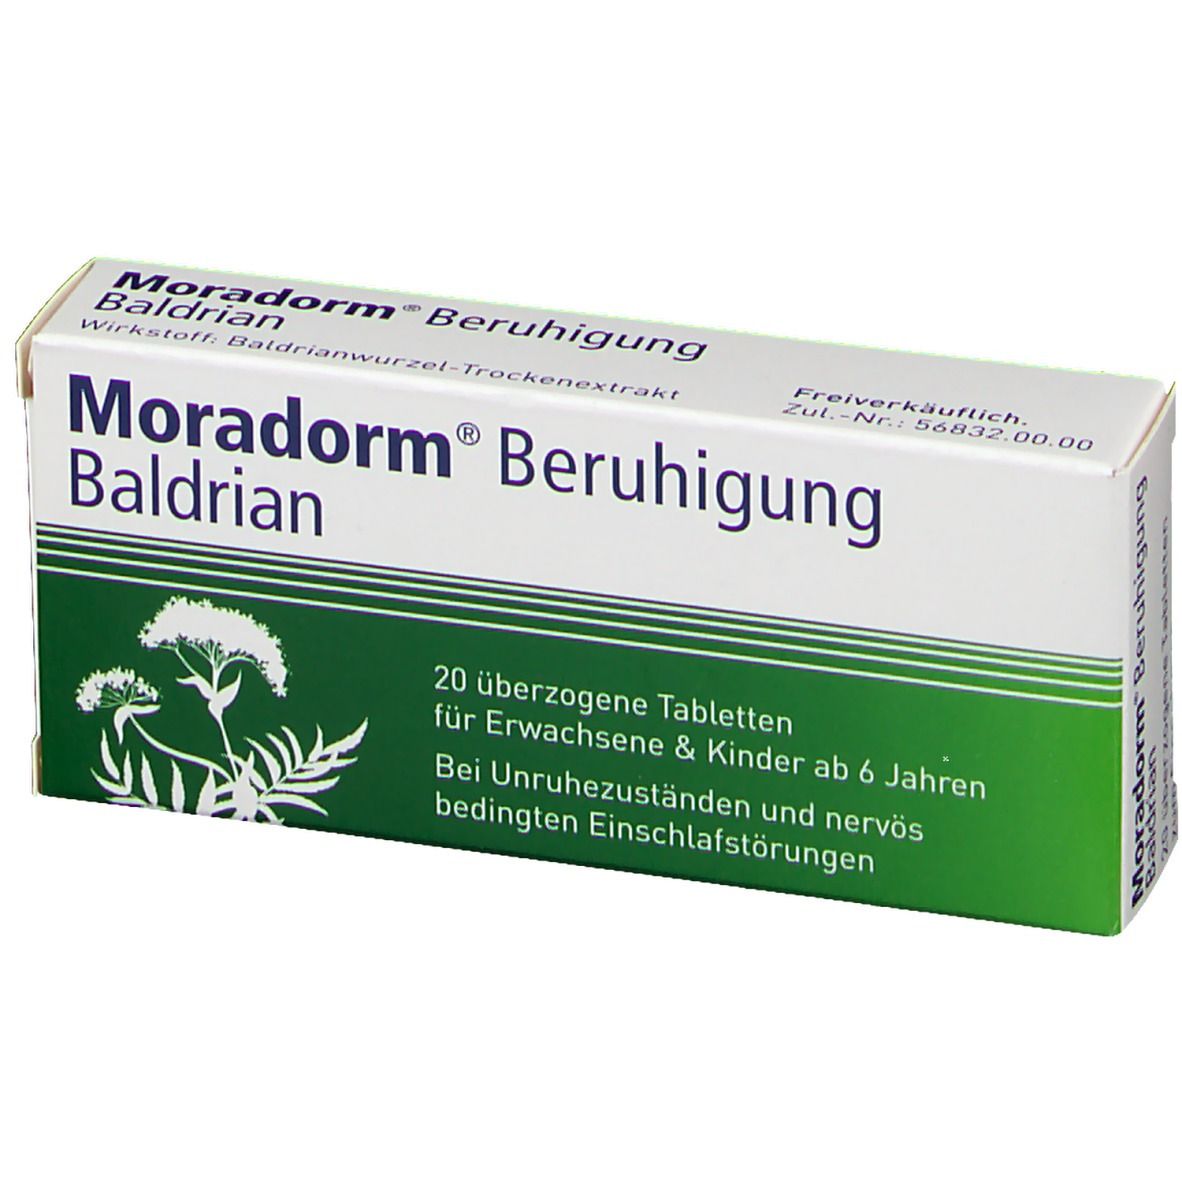 Moradorm® Beruhigung Baldrian